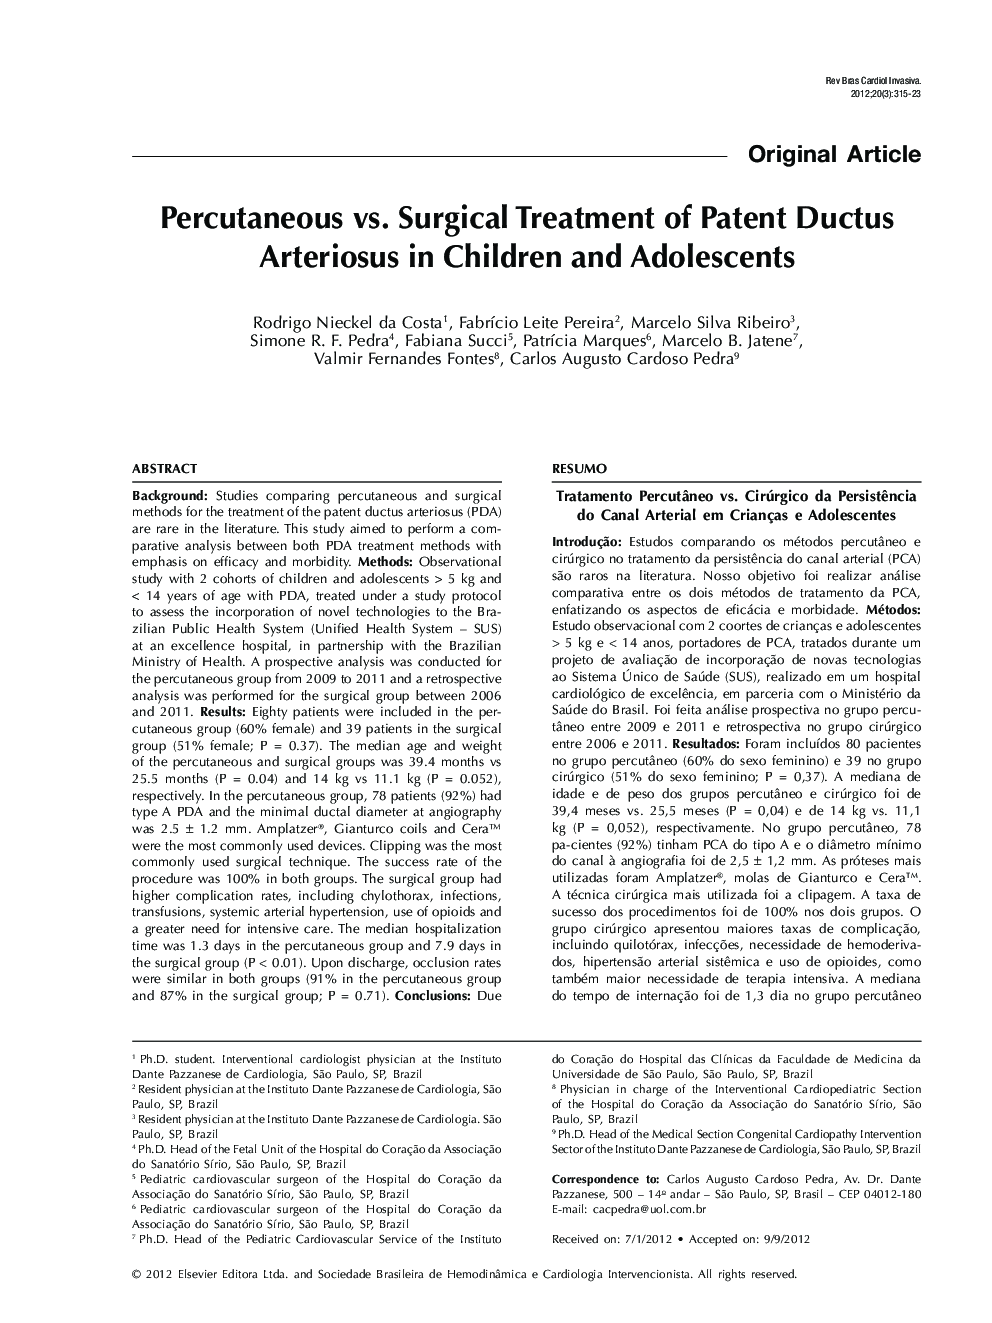 Percutaneous vs. Surgical Treatment of Patent Ductus Arteriosus in Children and Adolescents